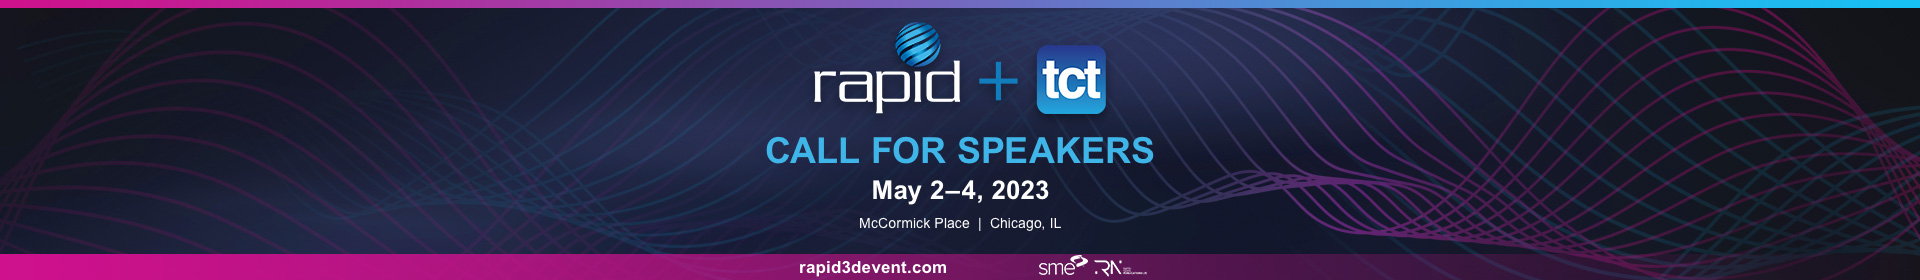 RAPID + TCT 2023 Event Banner